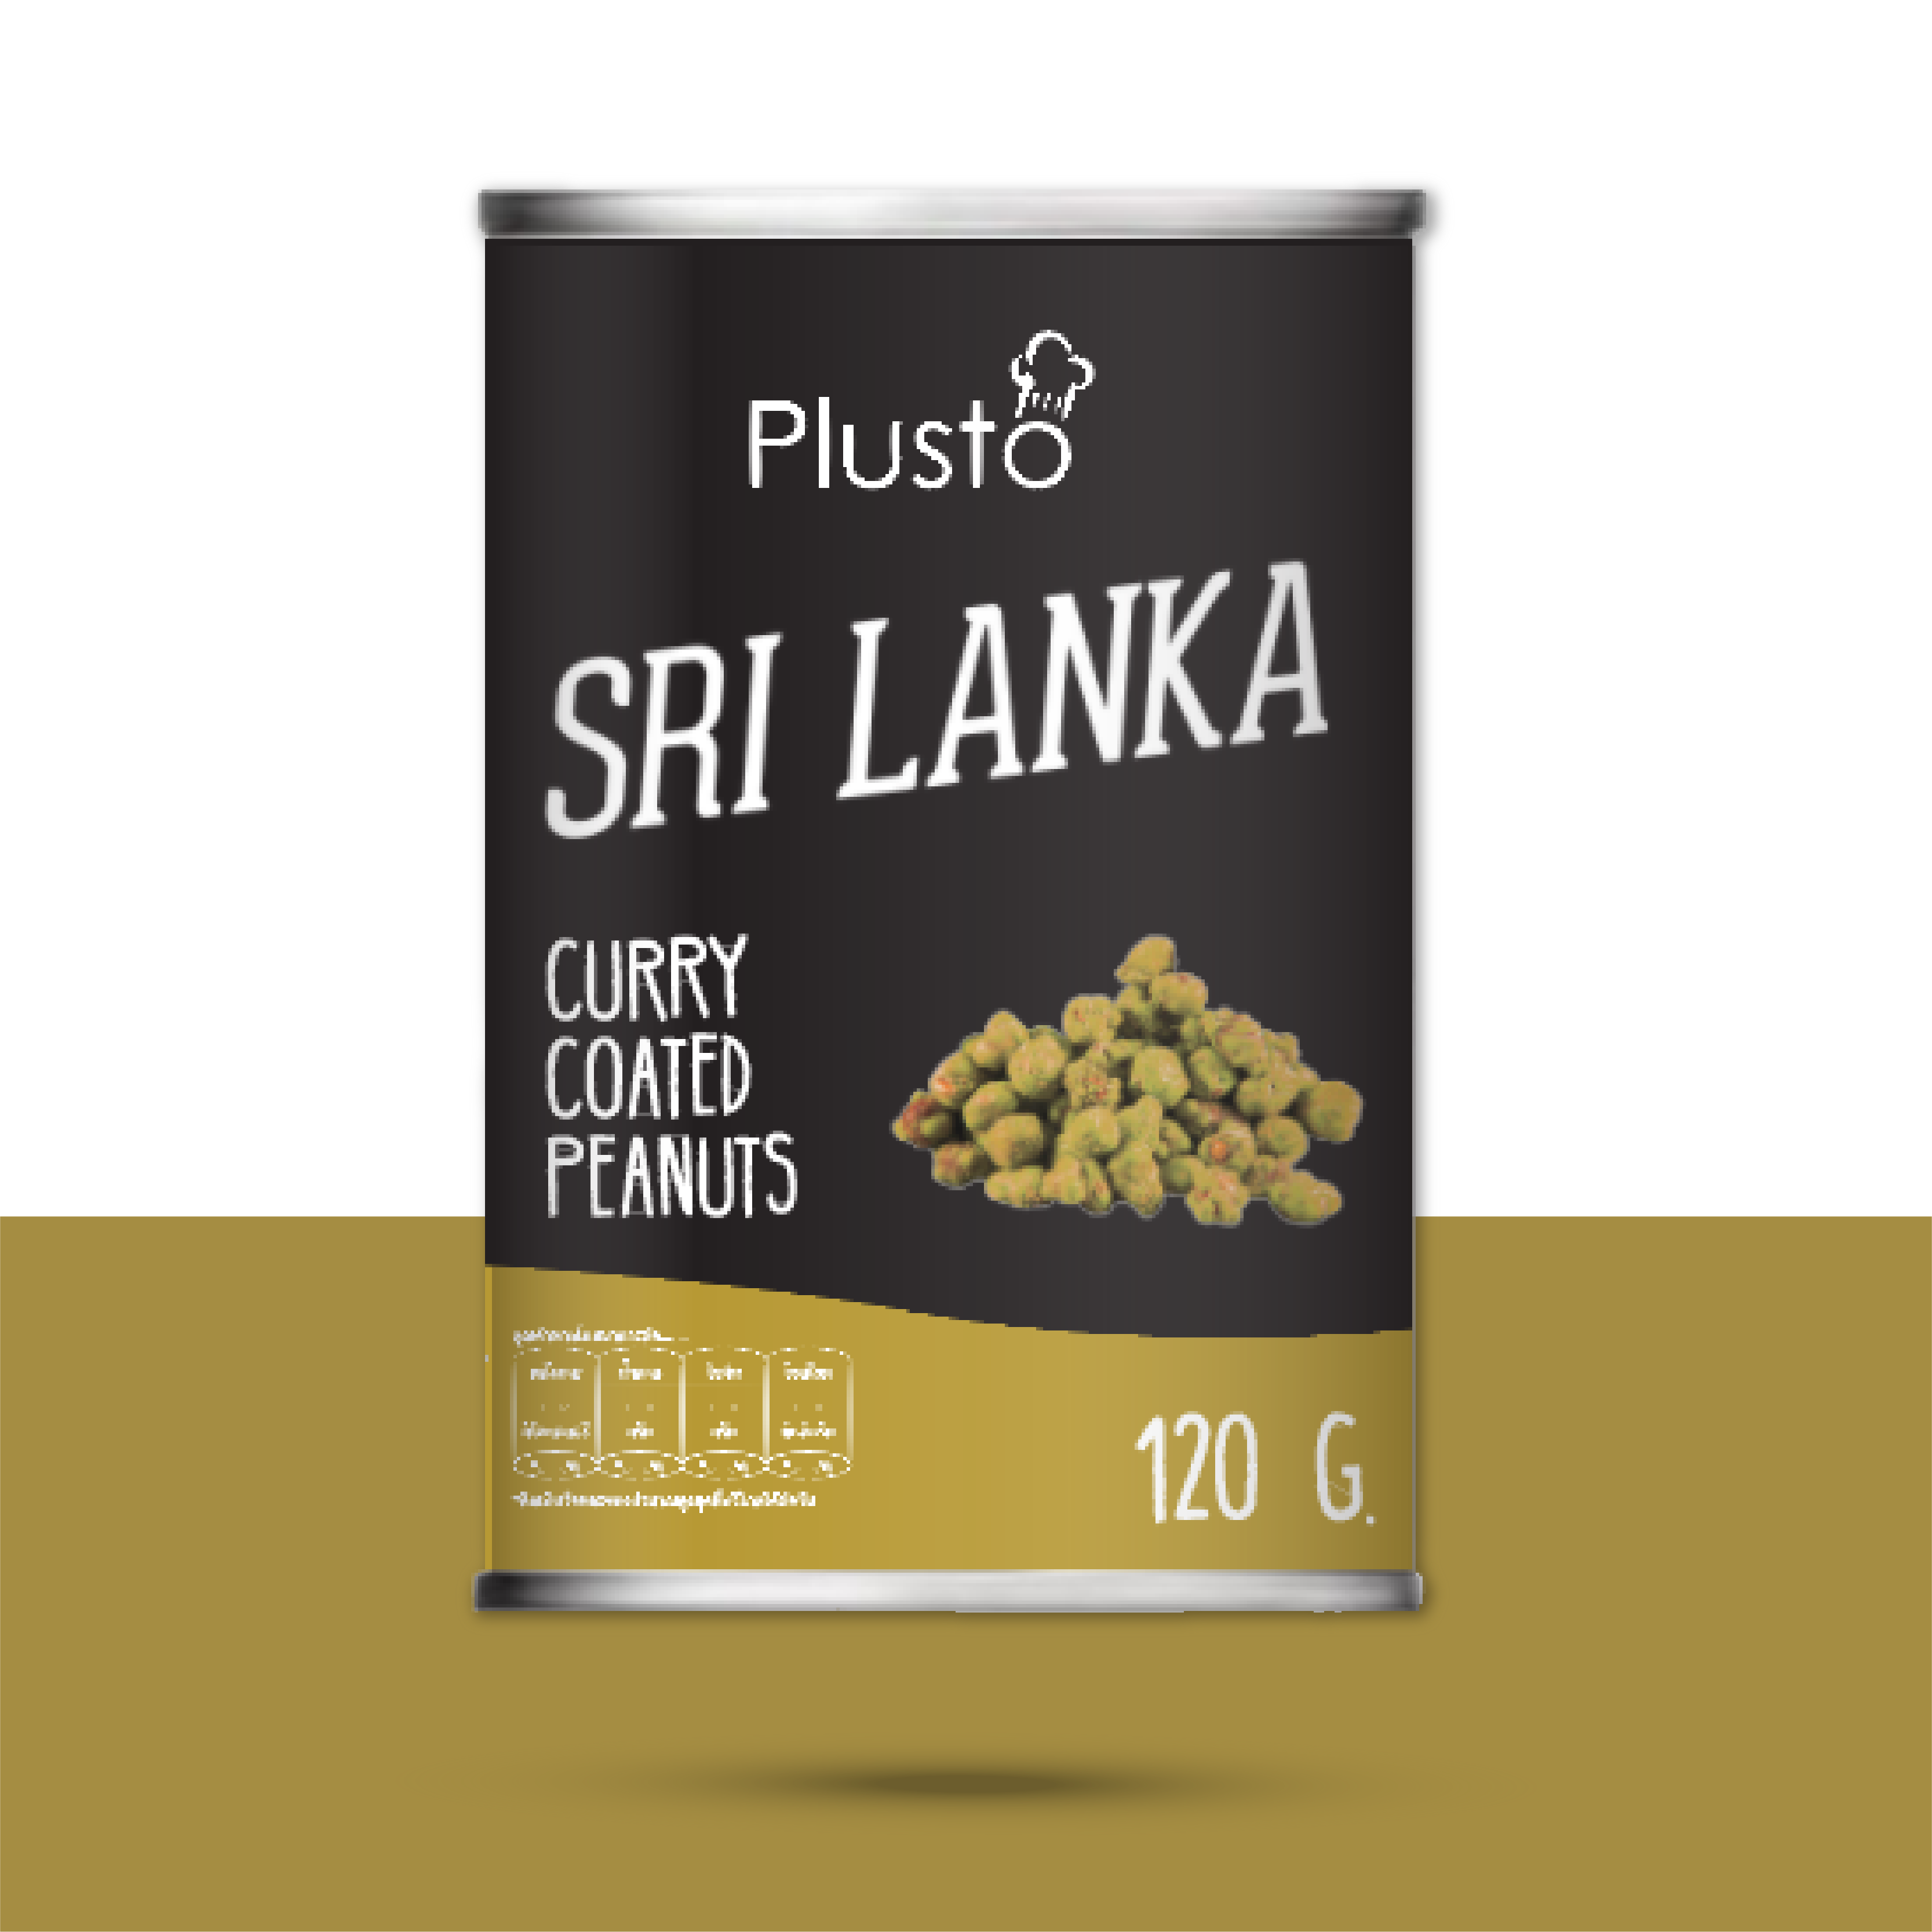 Sri Lanka Curry Coated Peanuts 120g